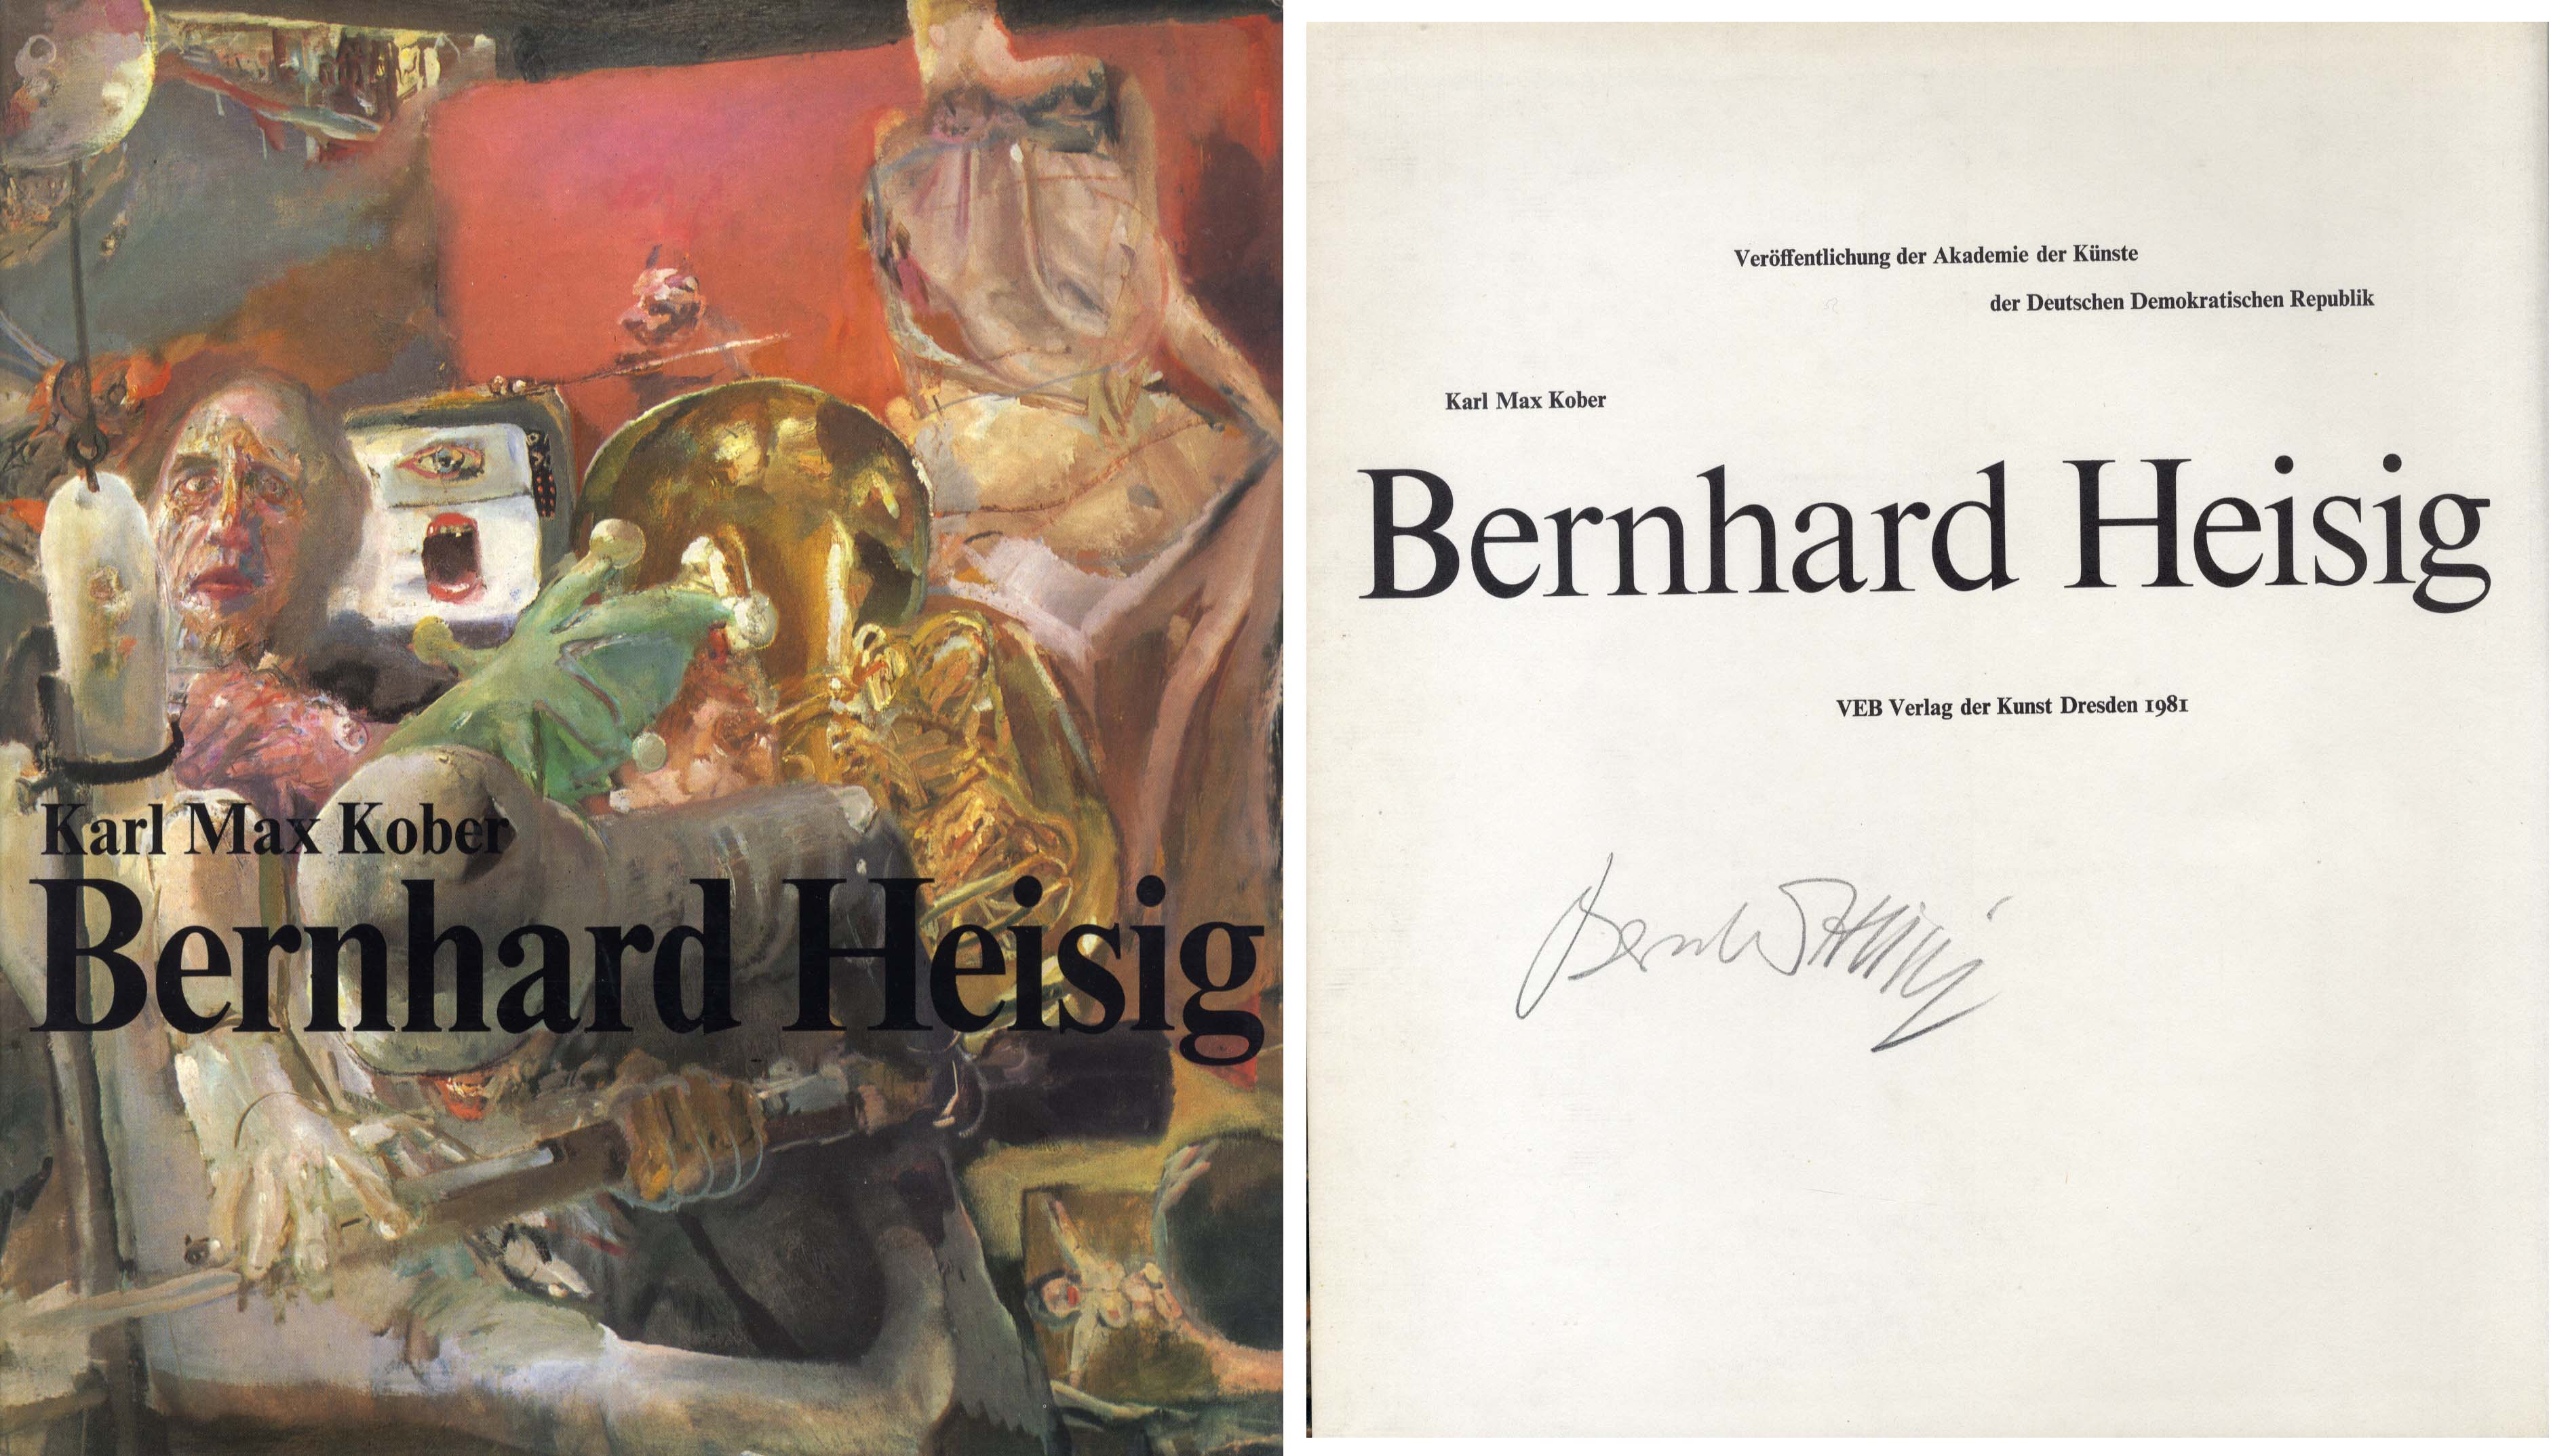 Bernhard Heisig Autograph Autogramm | ID 7069121970325